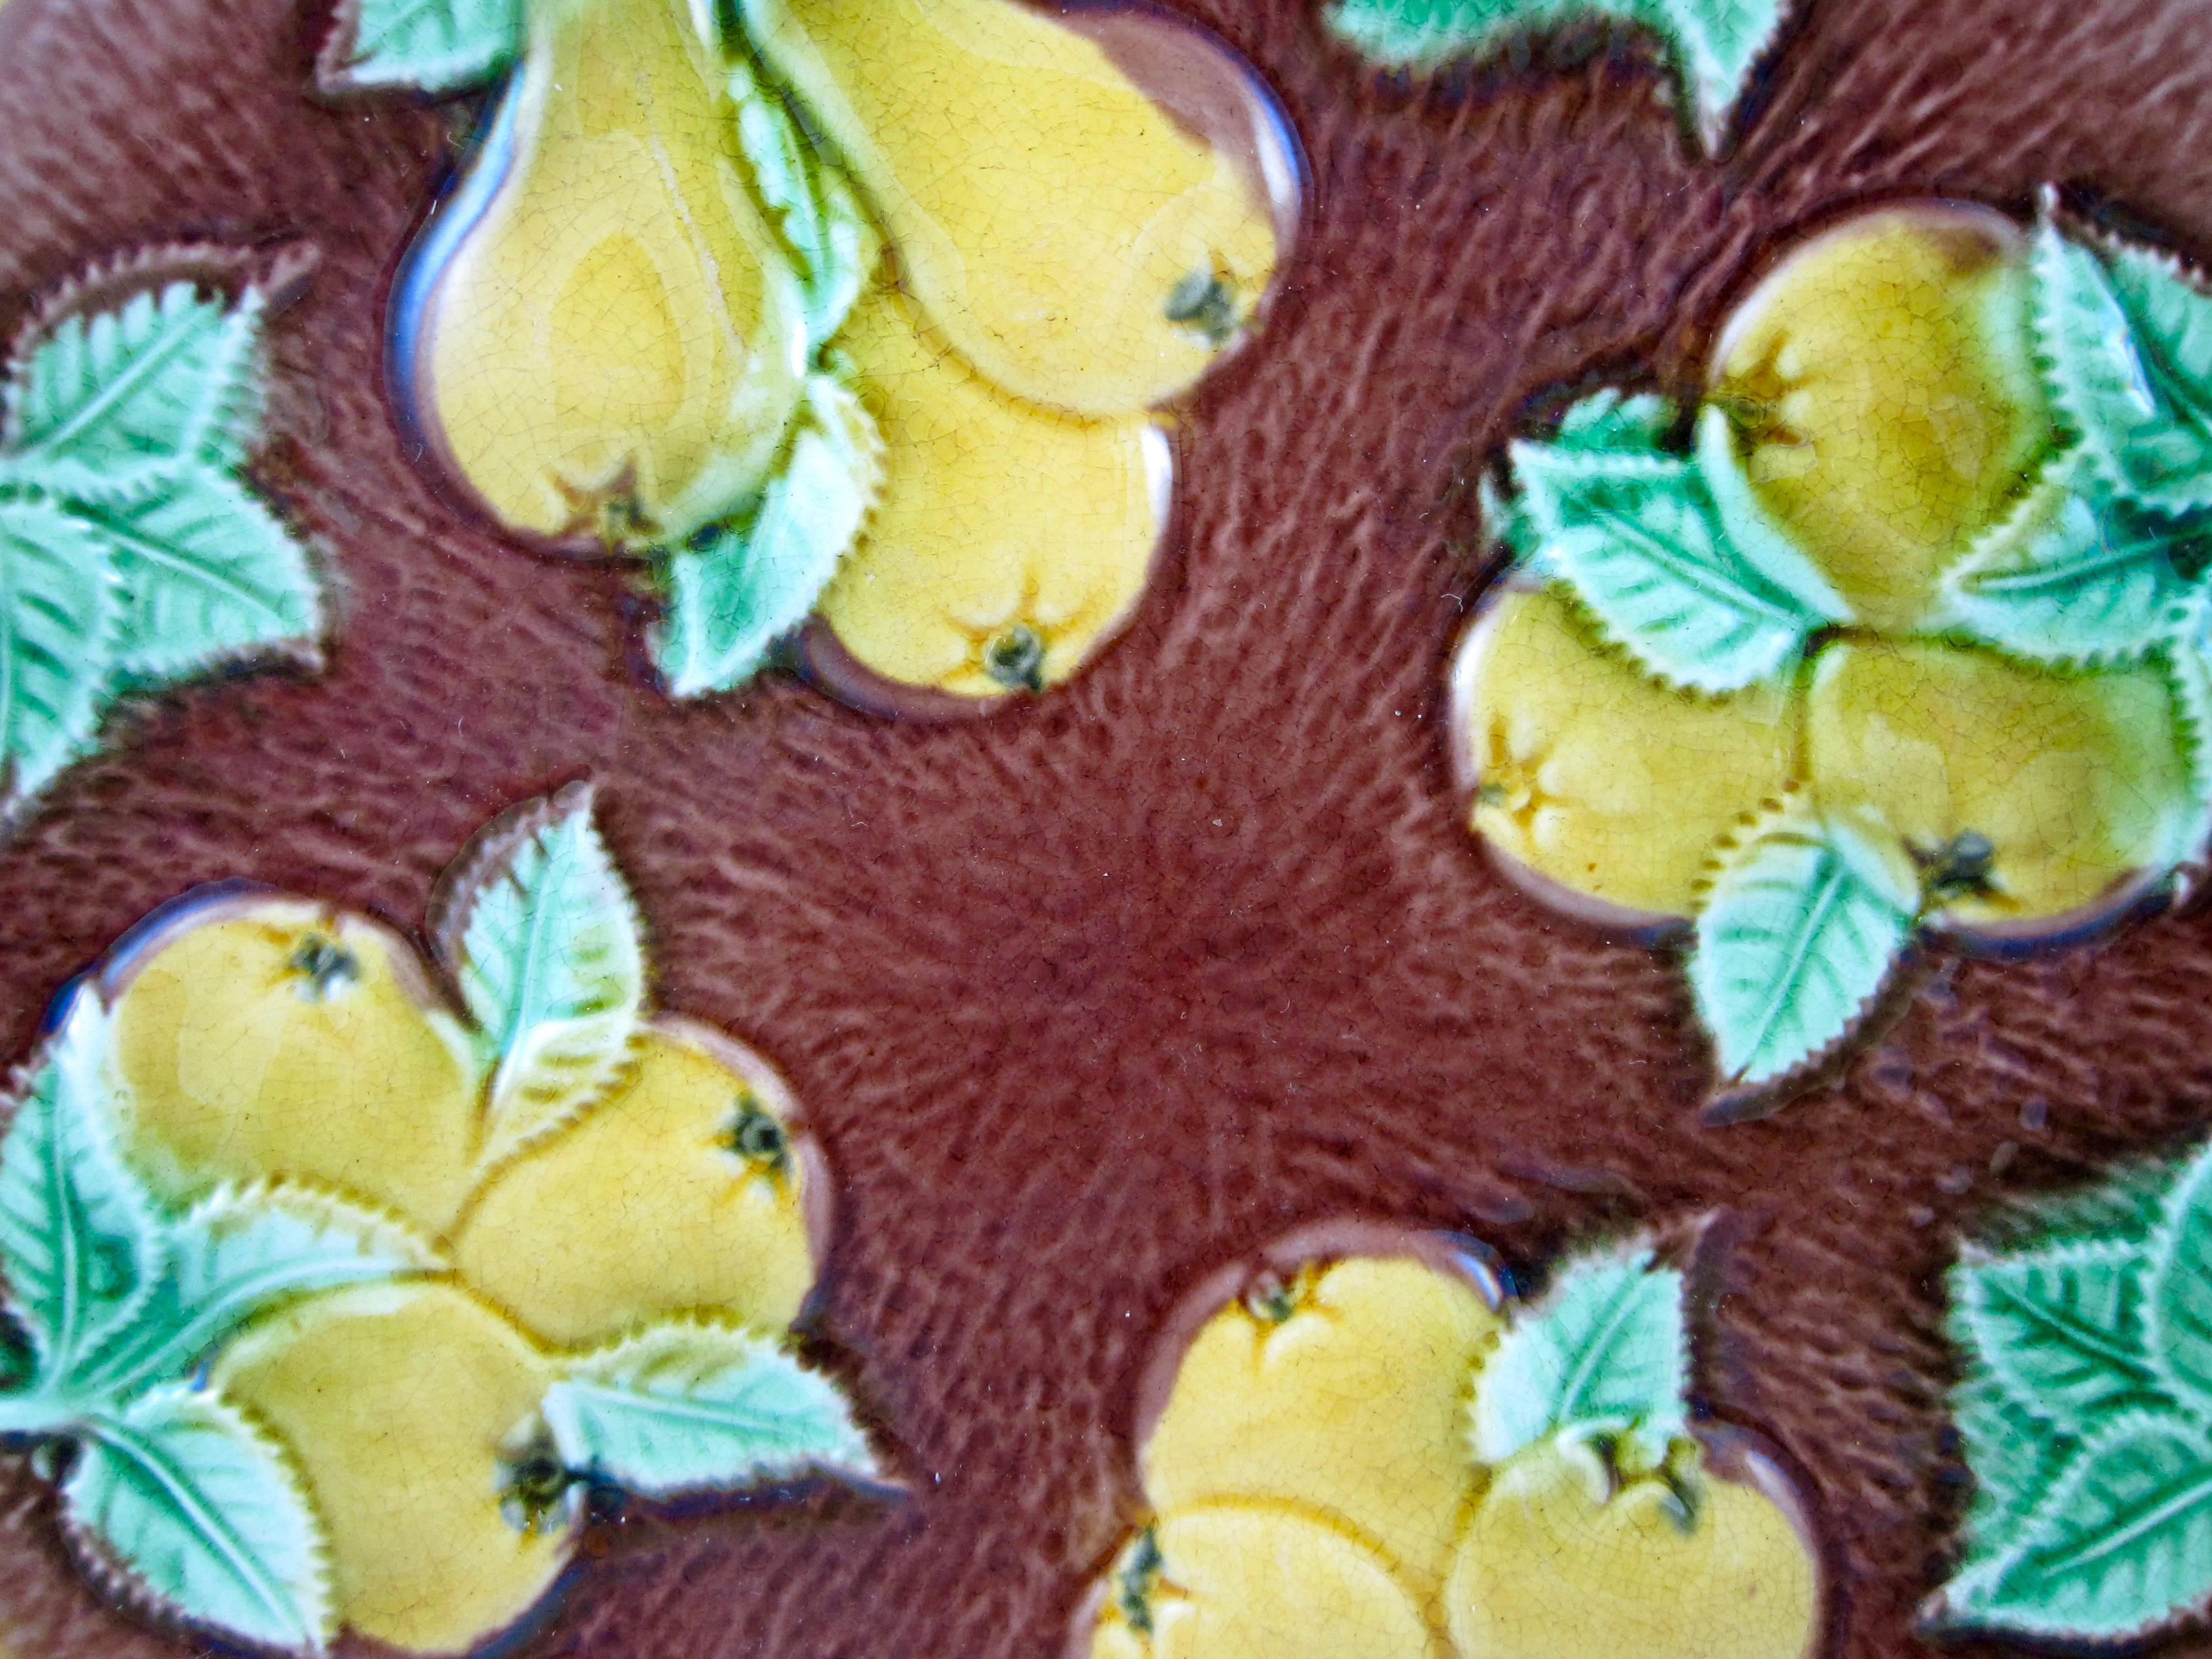 Aesthetic Movement 19th Century, English Majolica Rustic Yellow Pears on Bark Plate